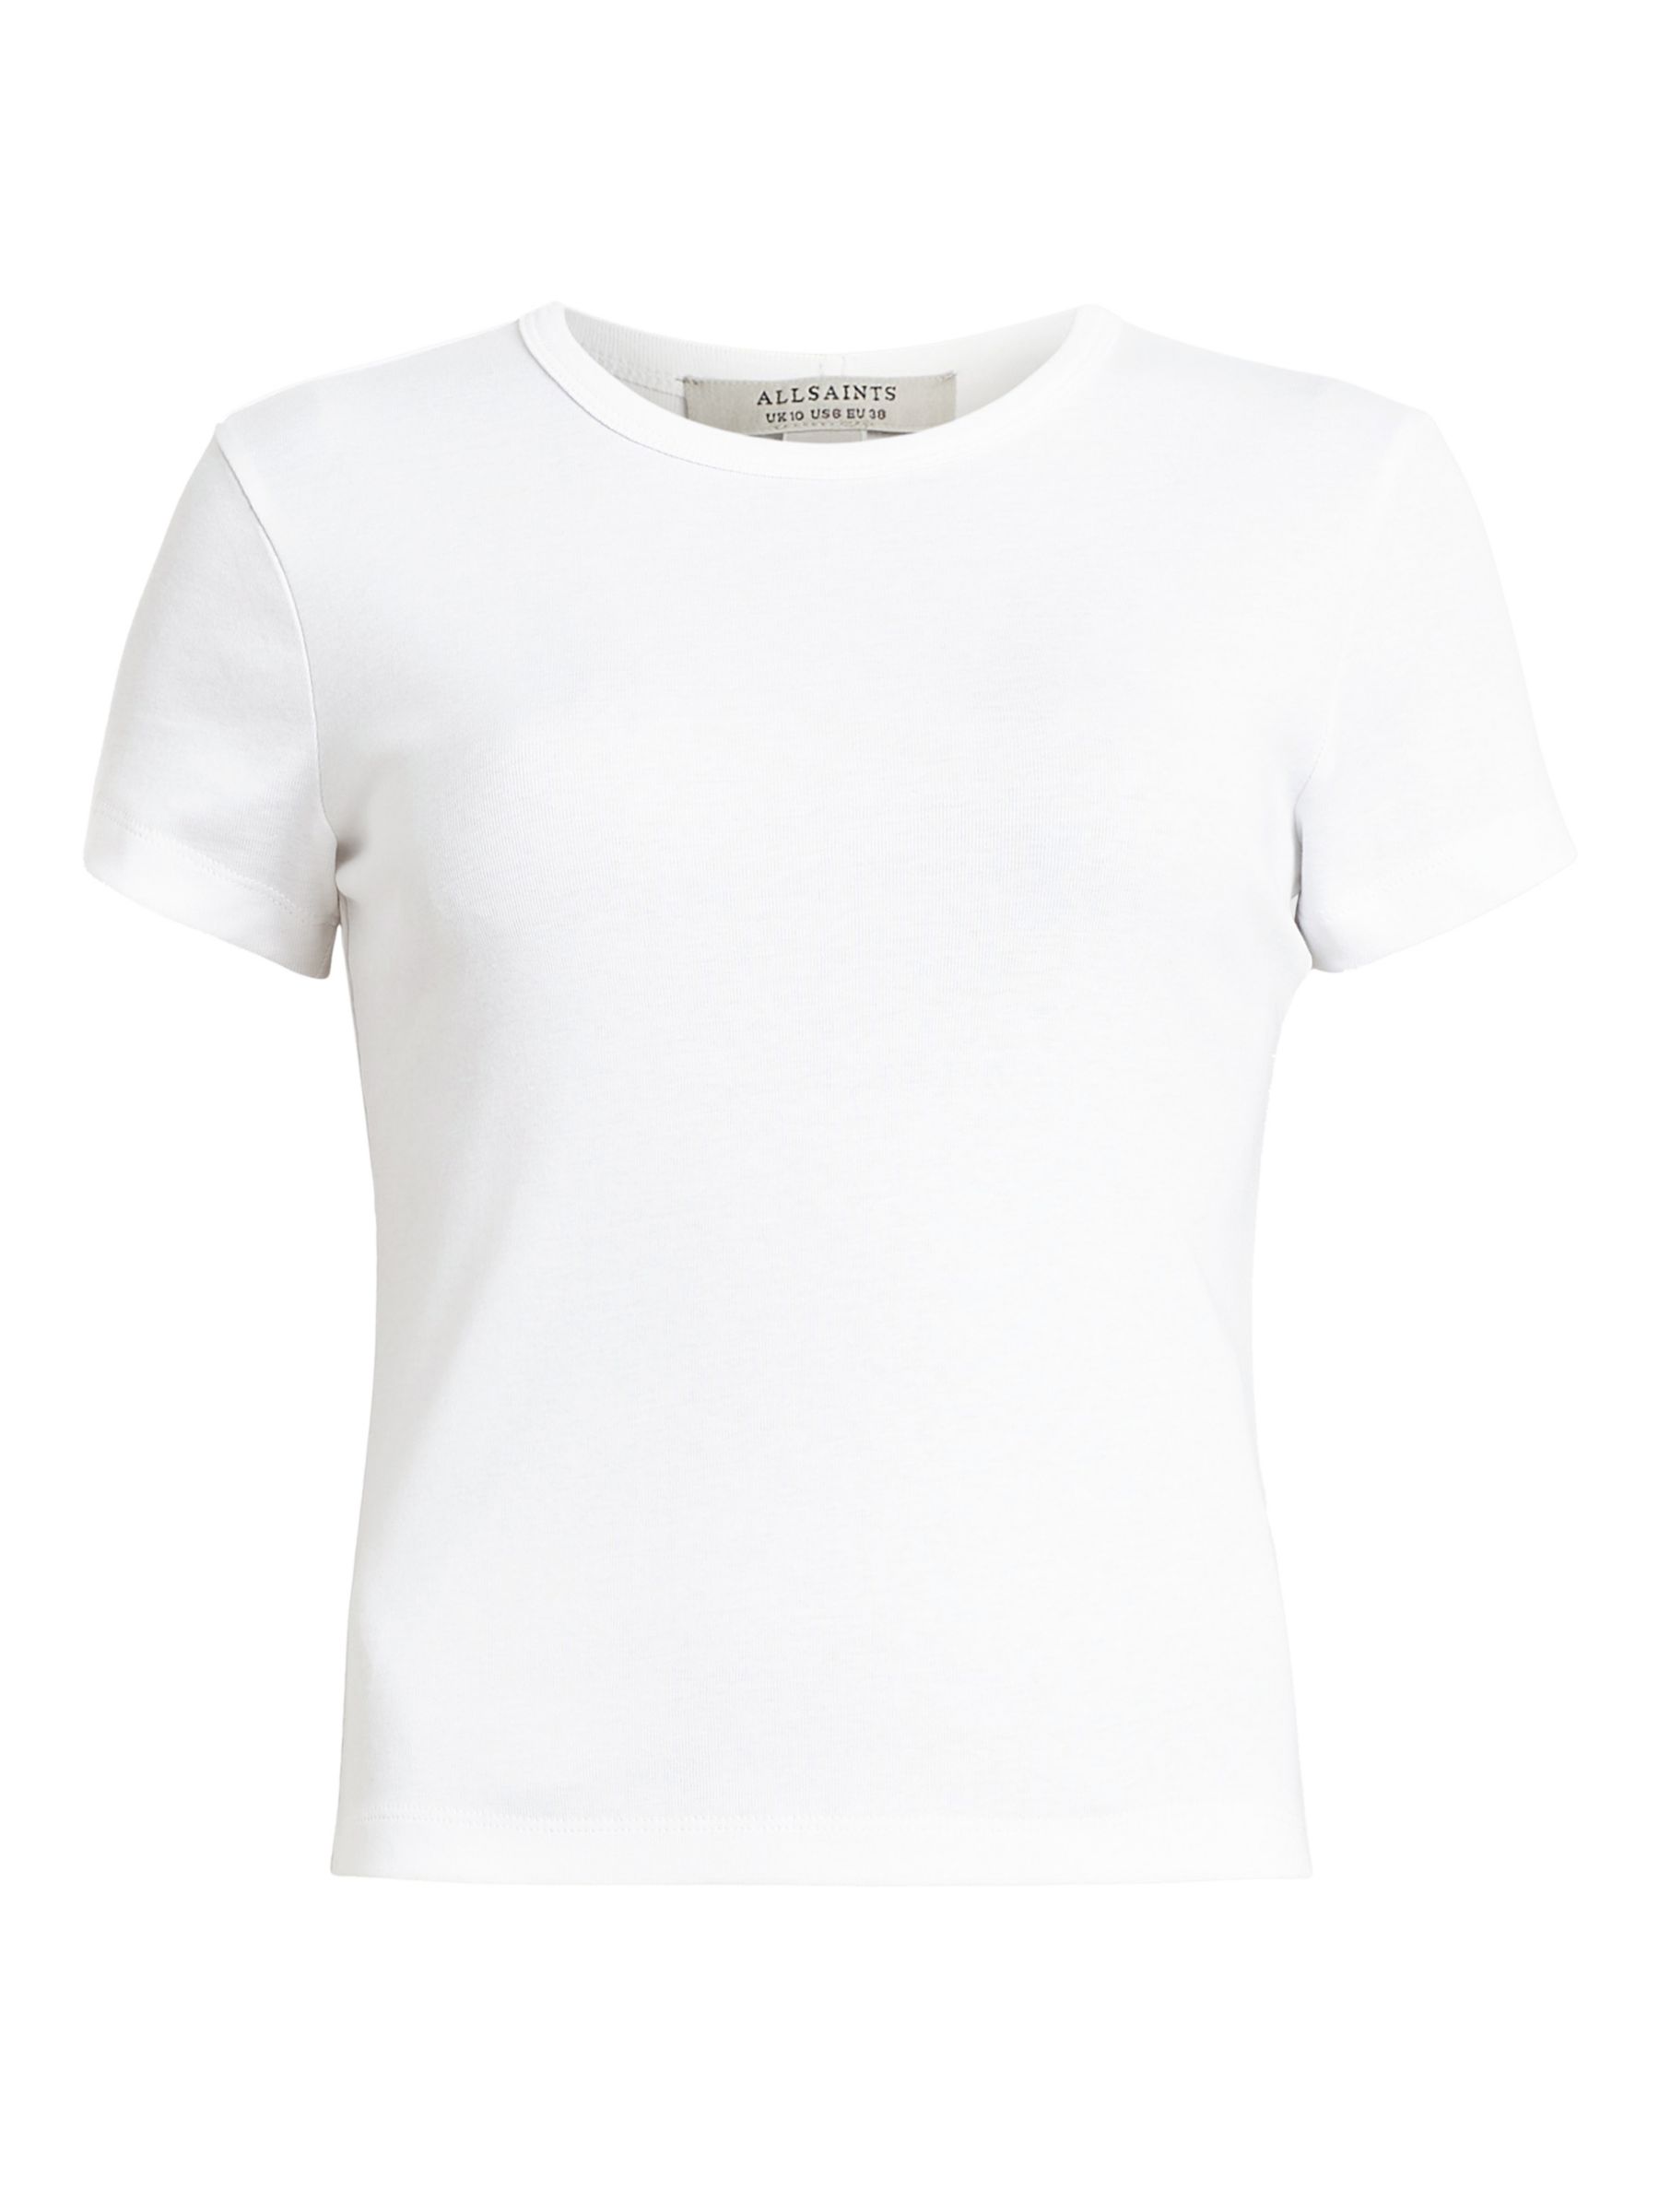 AllSaints Stevie Organic Cotton T-Shirt, Optic White at John Lewis ...